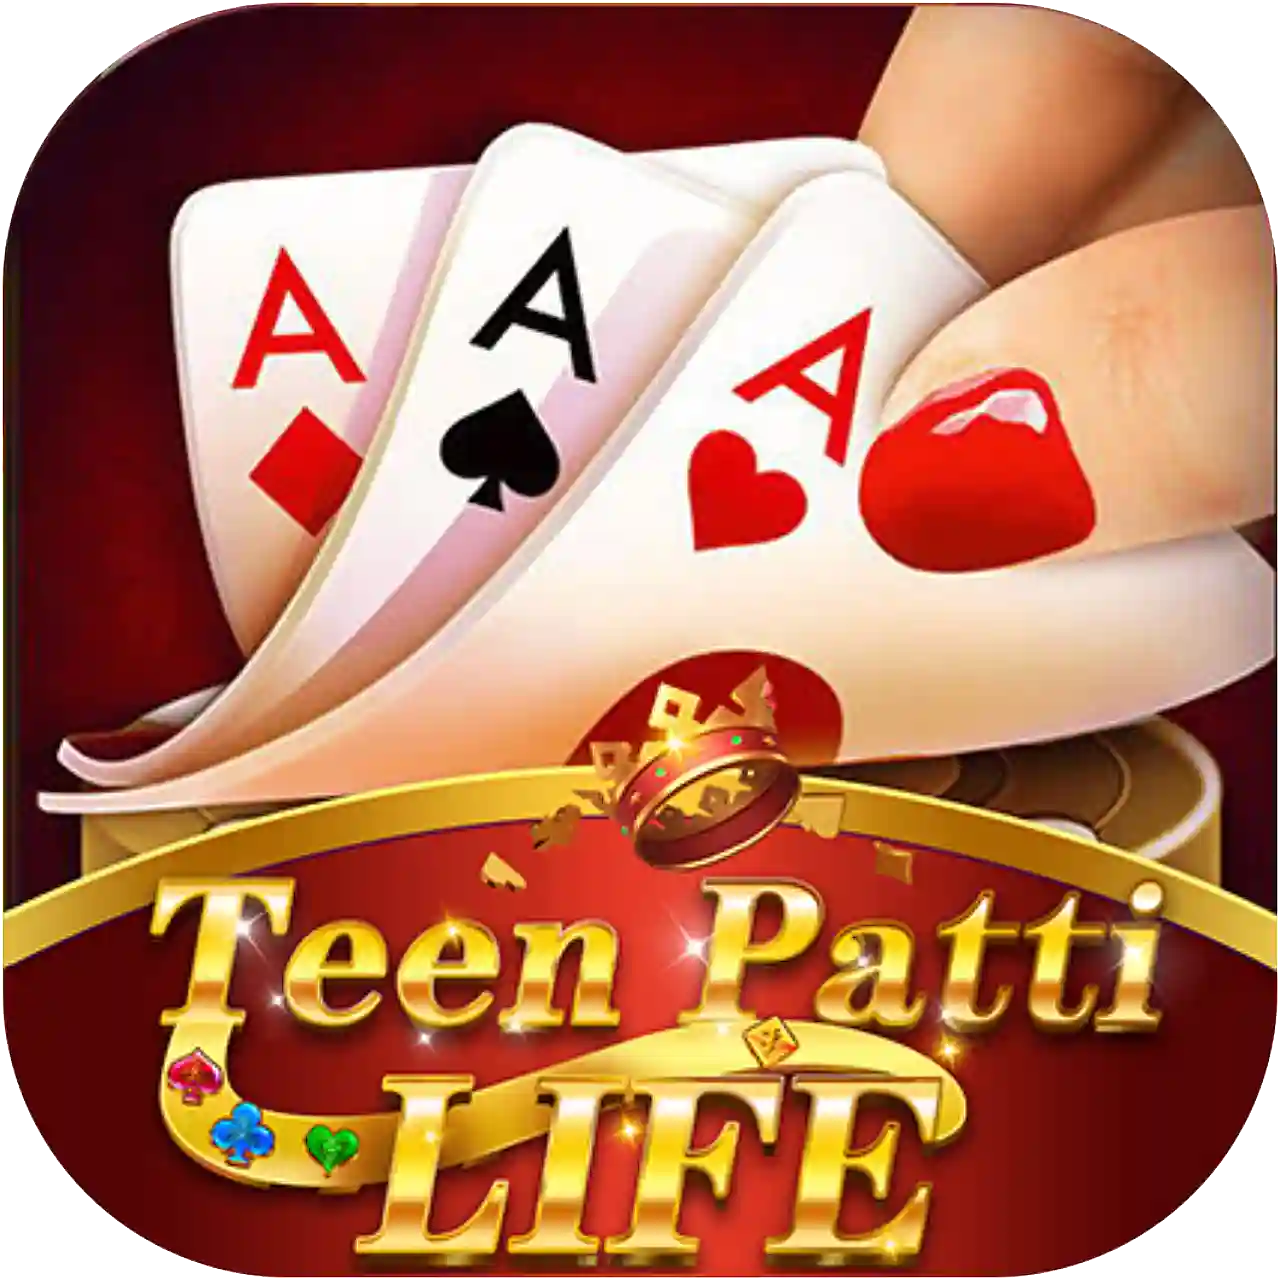 Teen Patti Life - Teen Patti Life